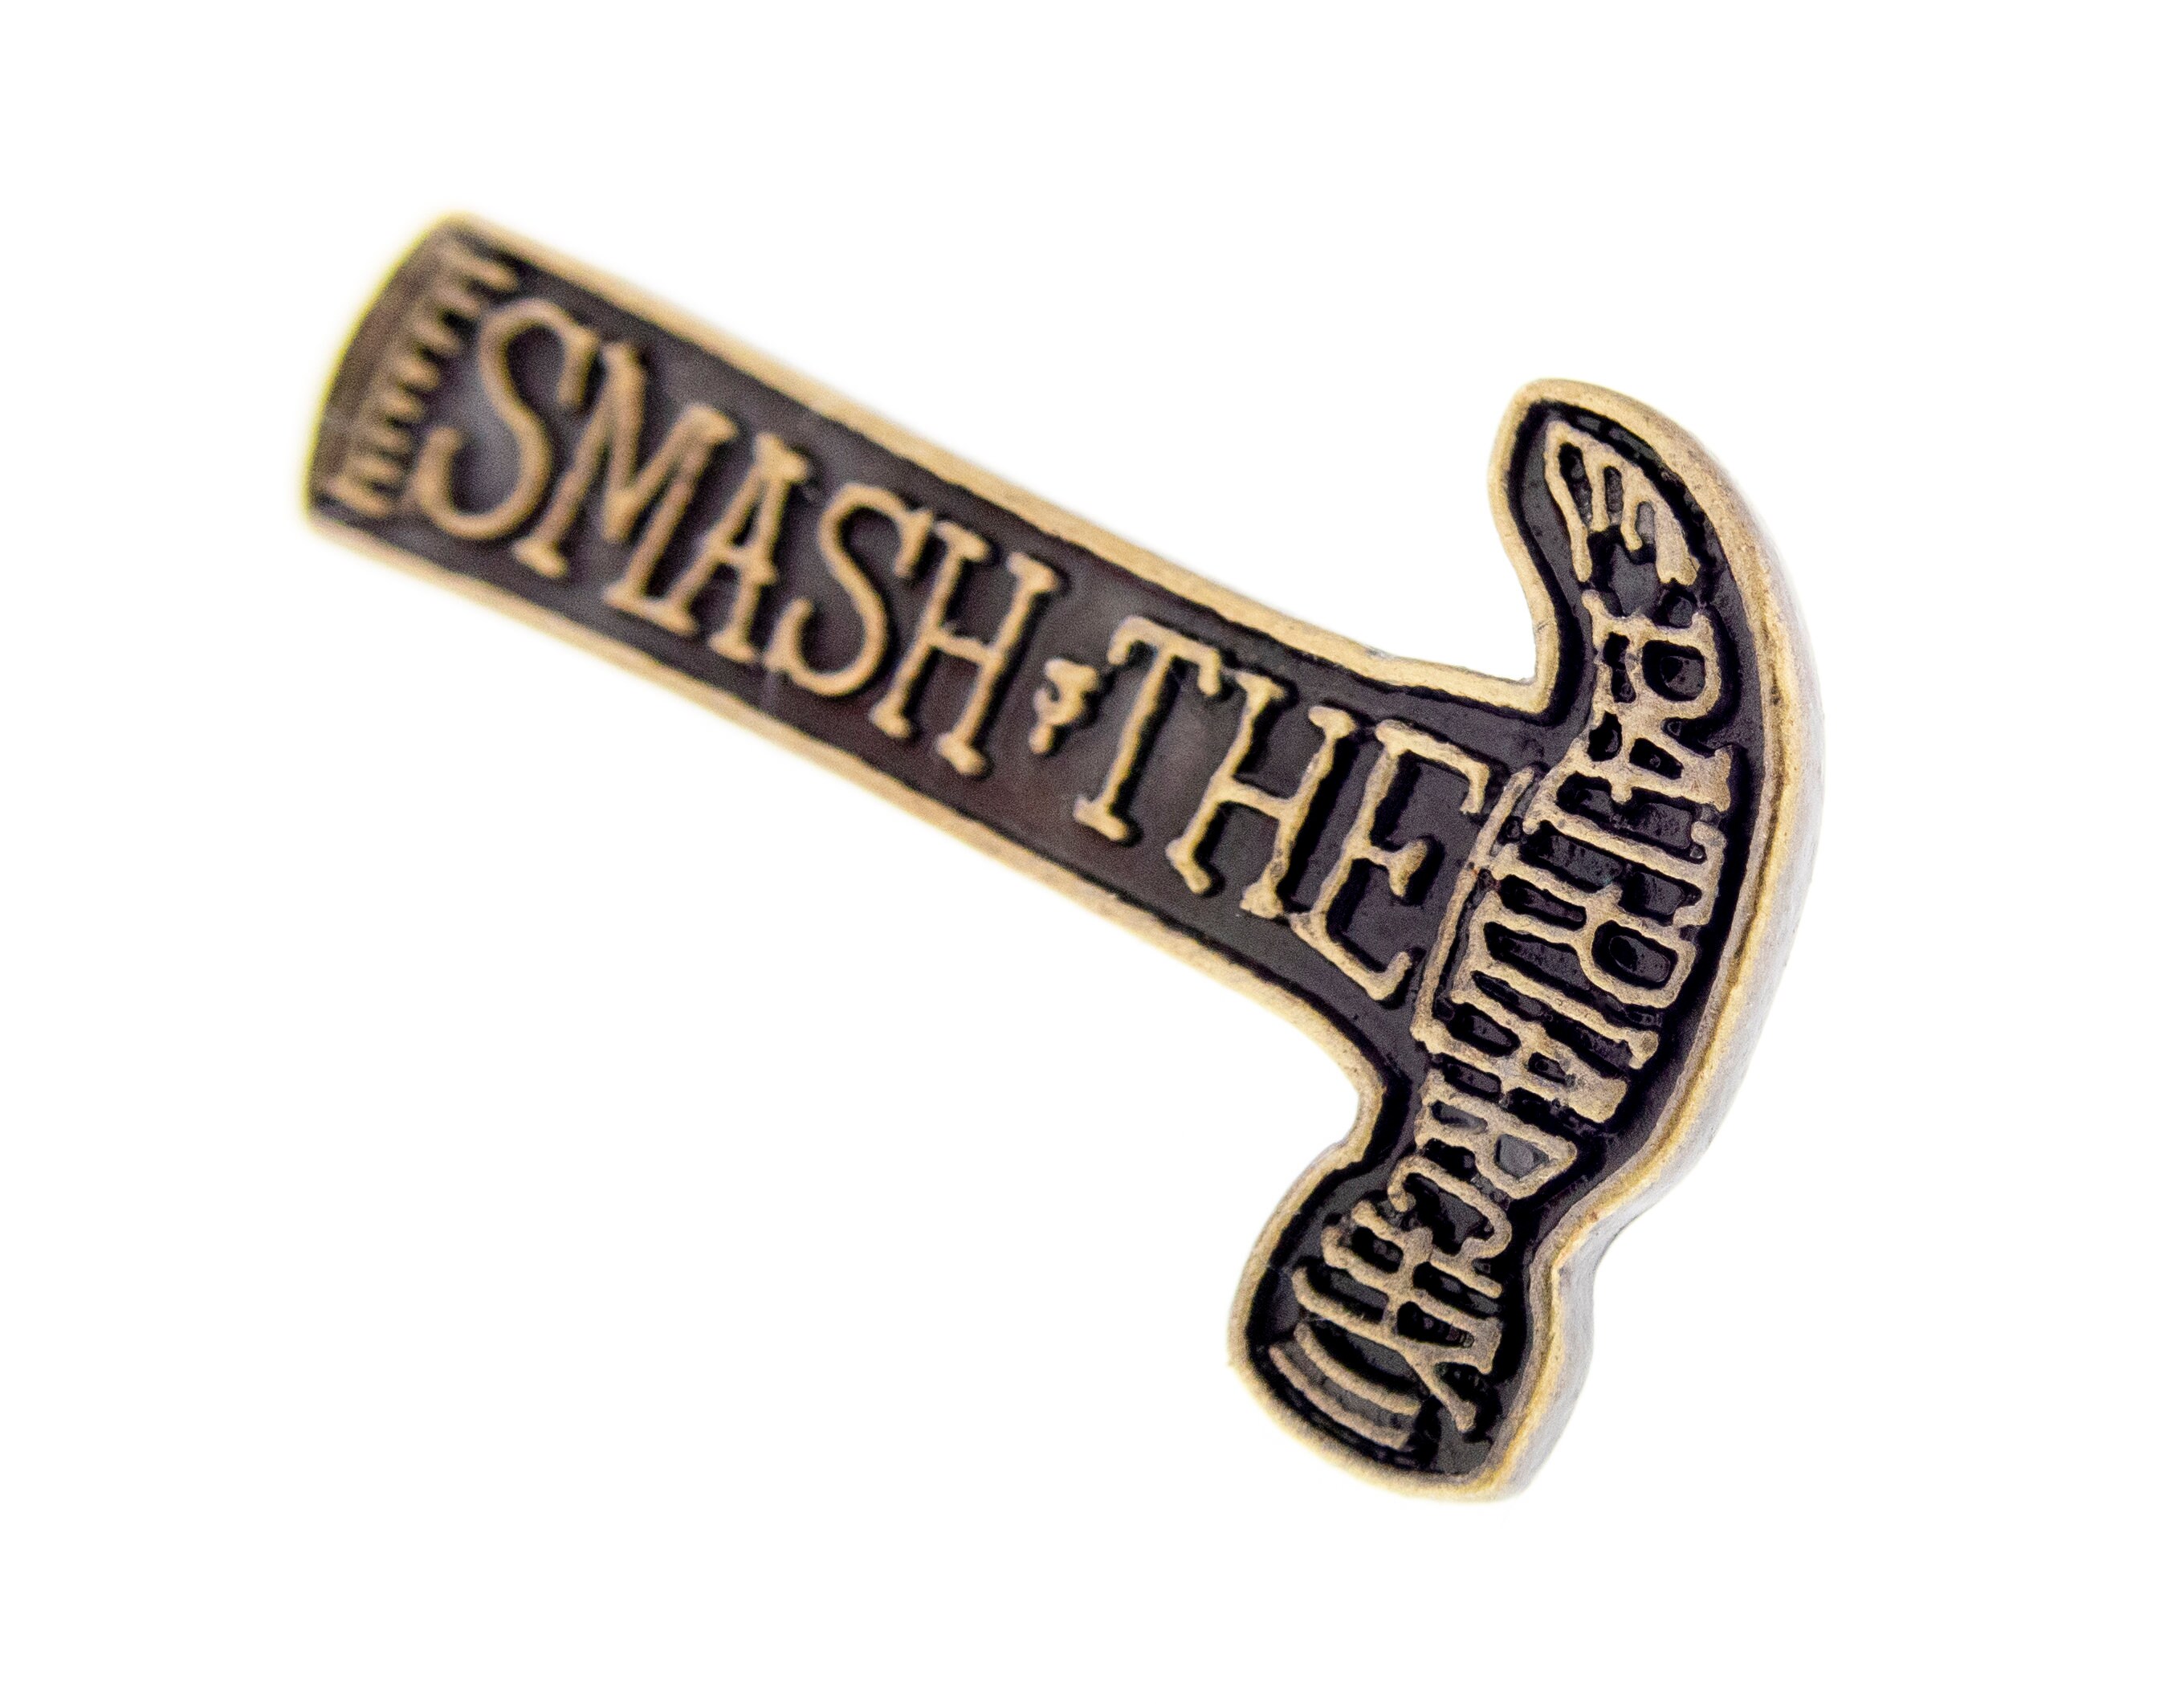 Feminism Feminist Equality Metal Pin Brooch Lapel Badge Enamel Gifts 